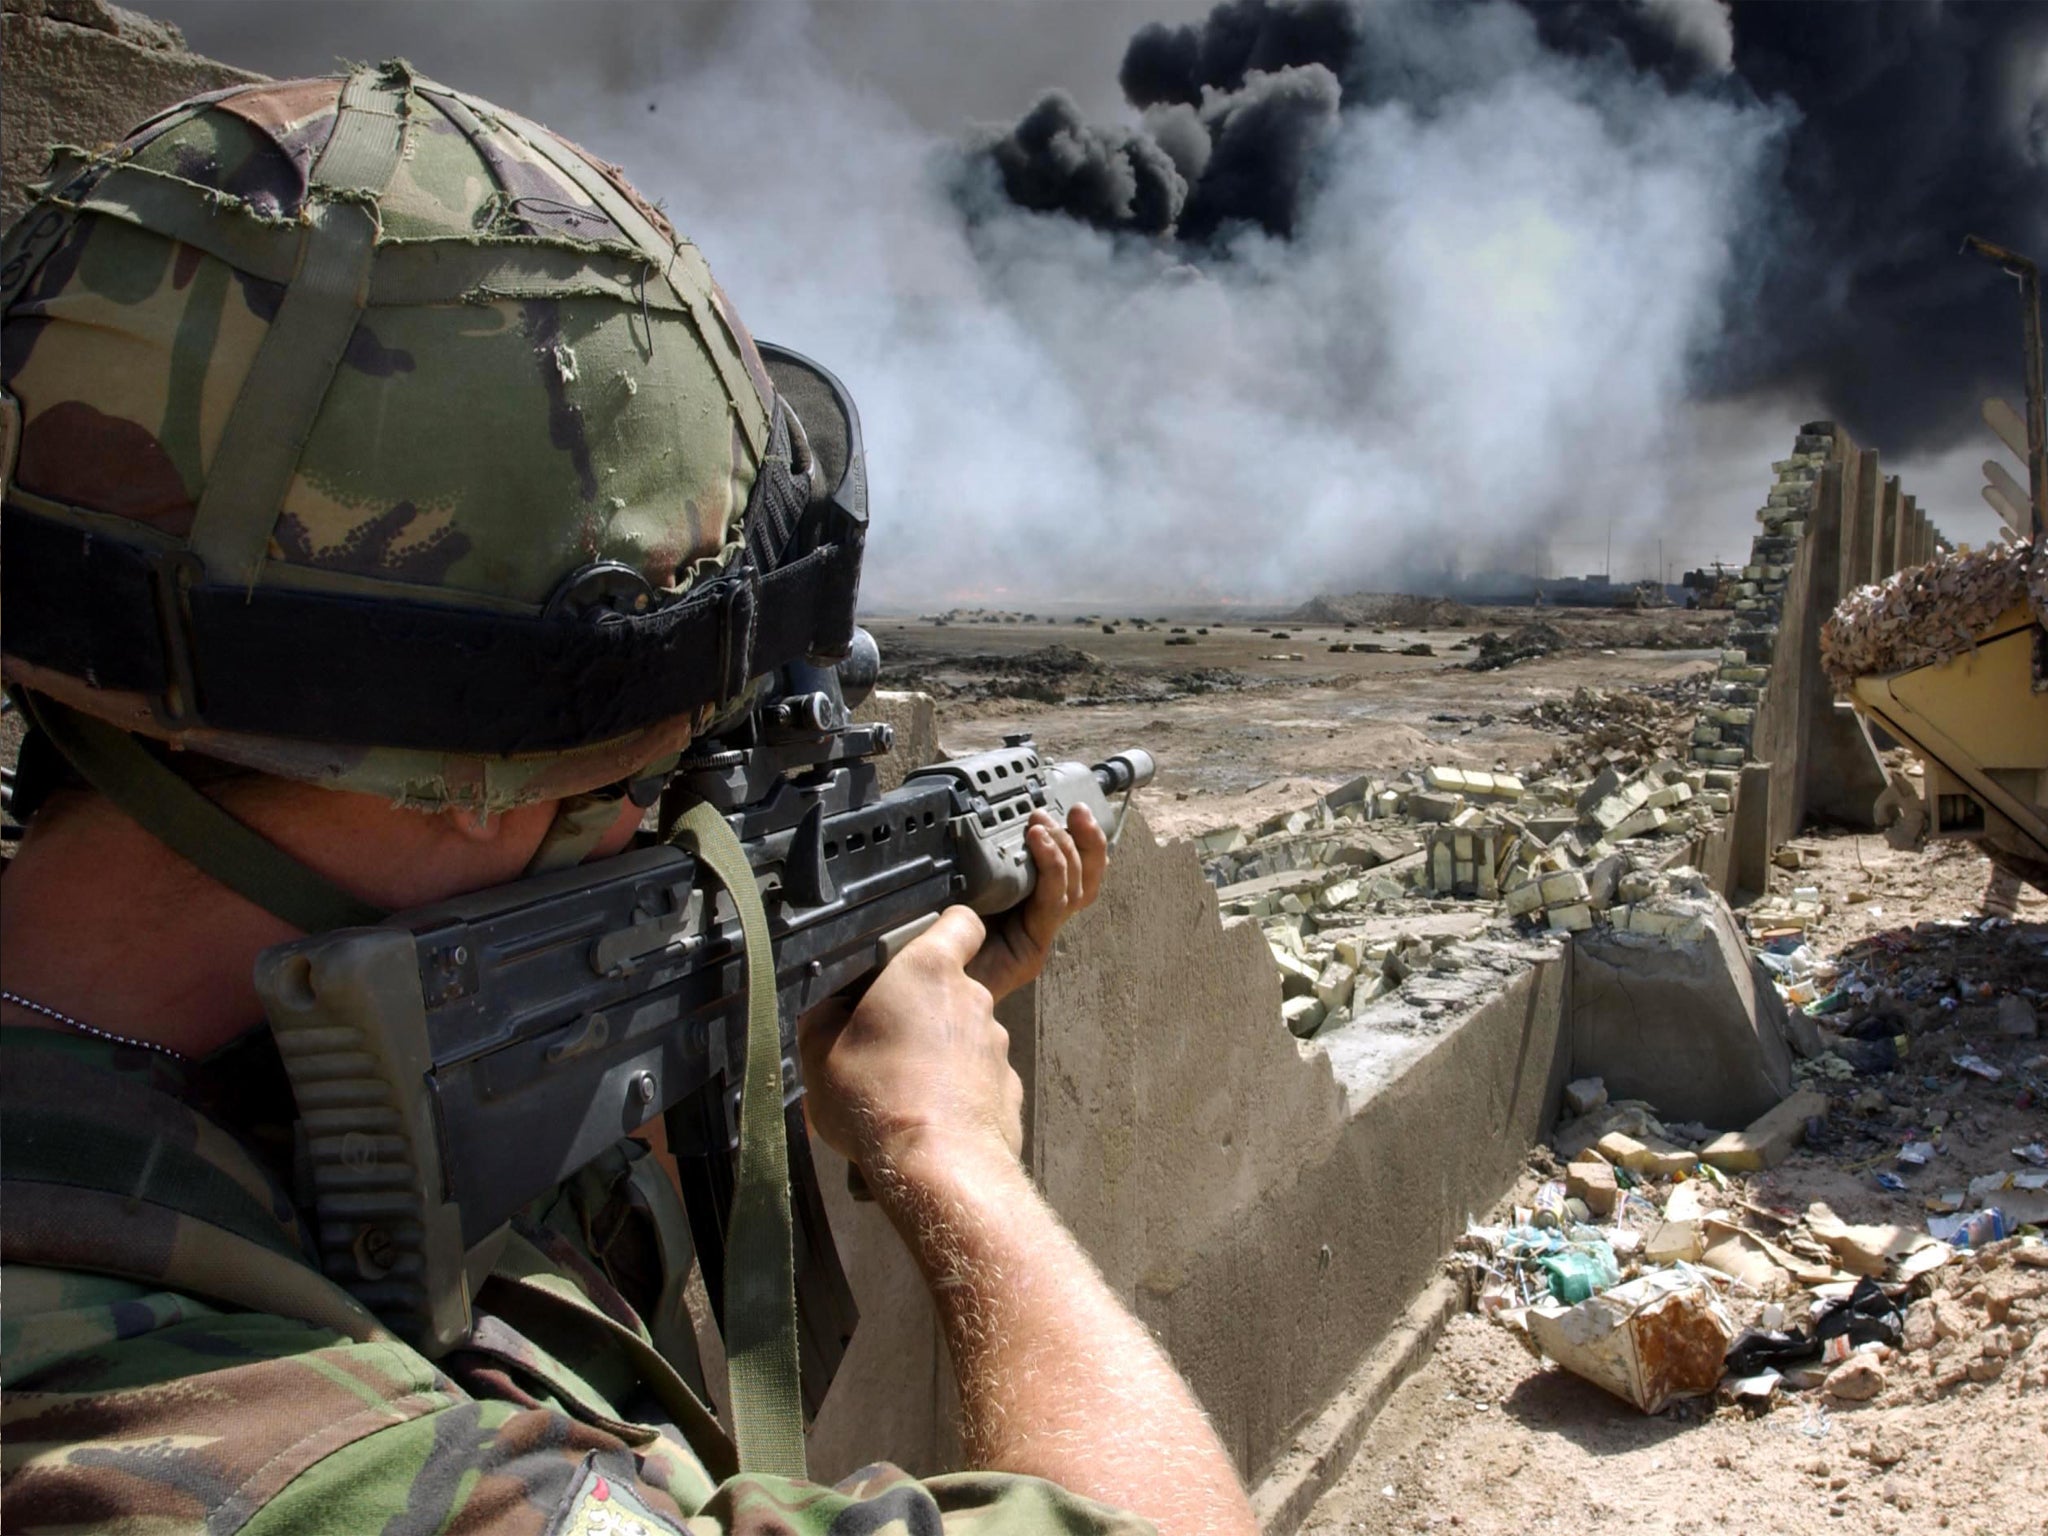 A British soldier takes aim in Basra, Iraq